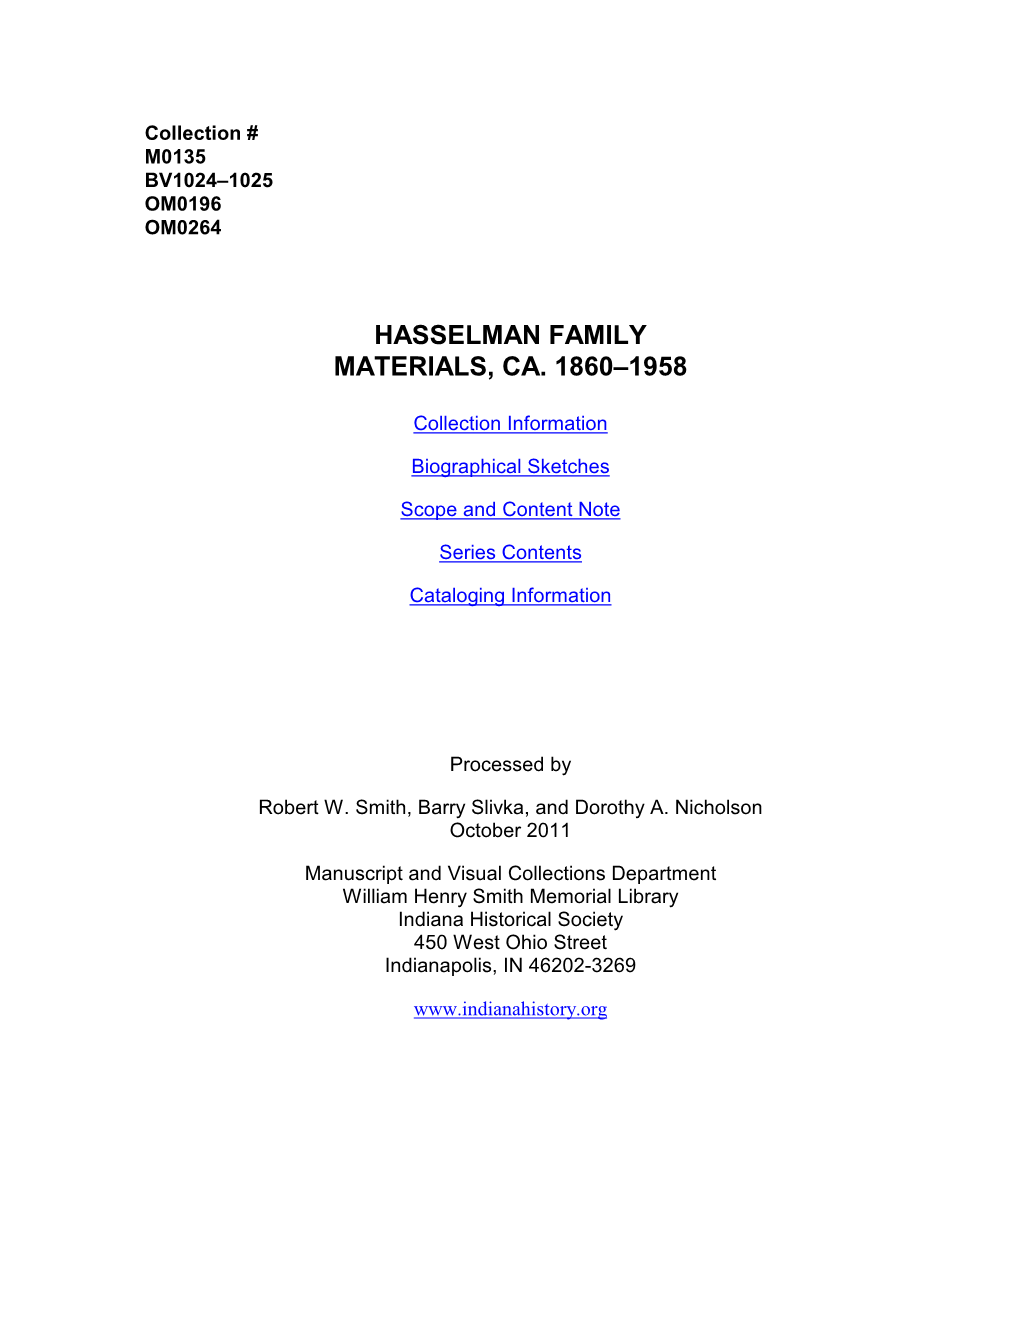 Hasselman Family Materials, Ca